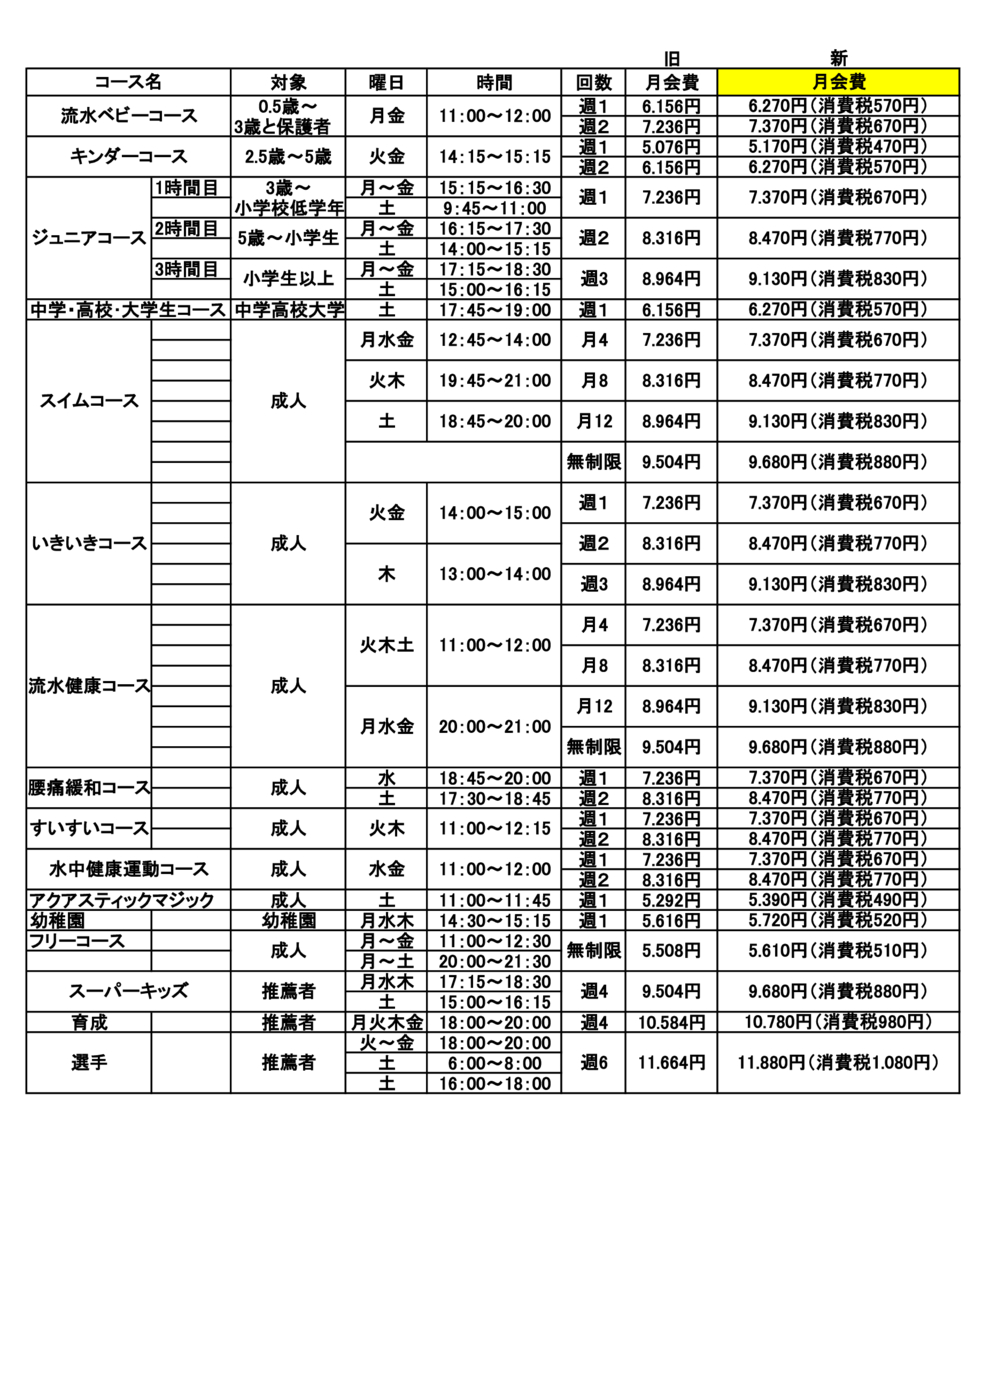 2019お知らせ掲載消費税月会費時間割xlsx